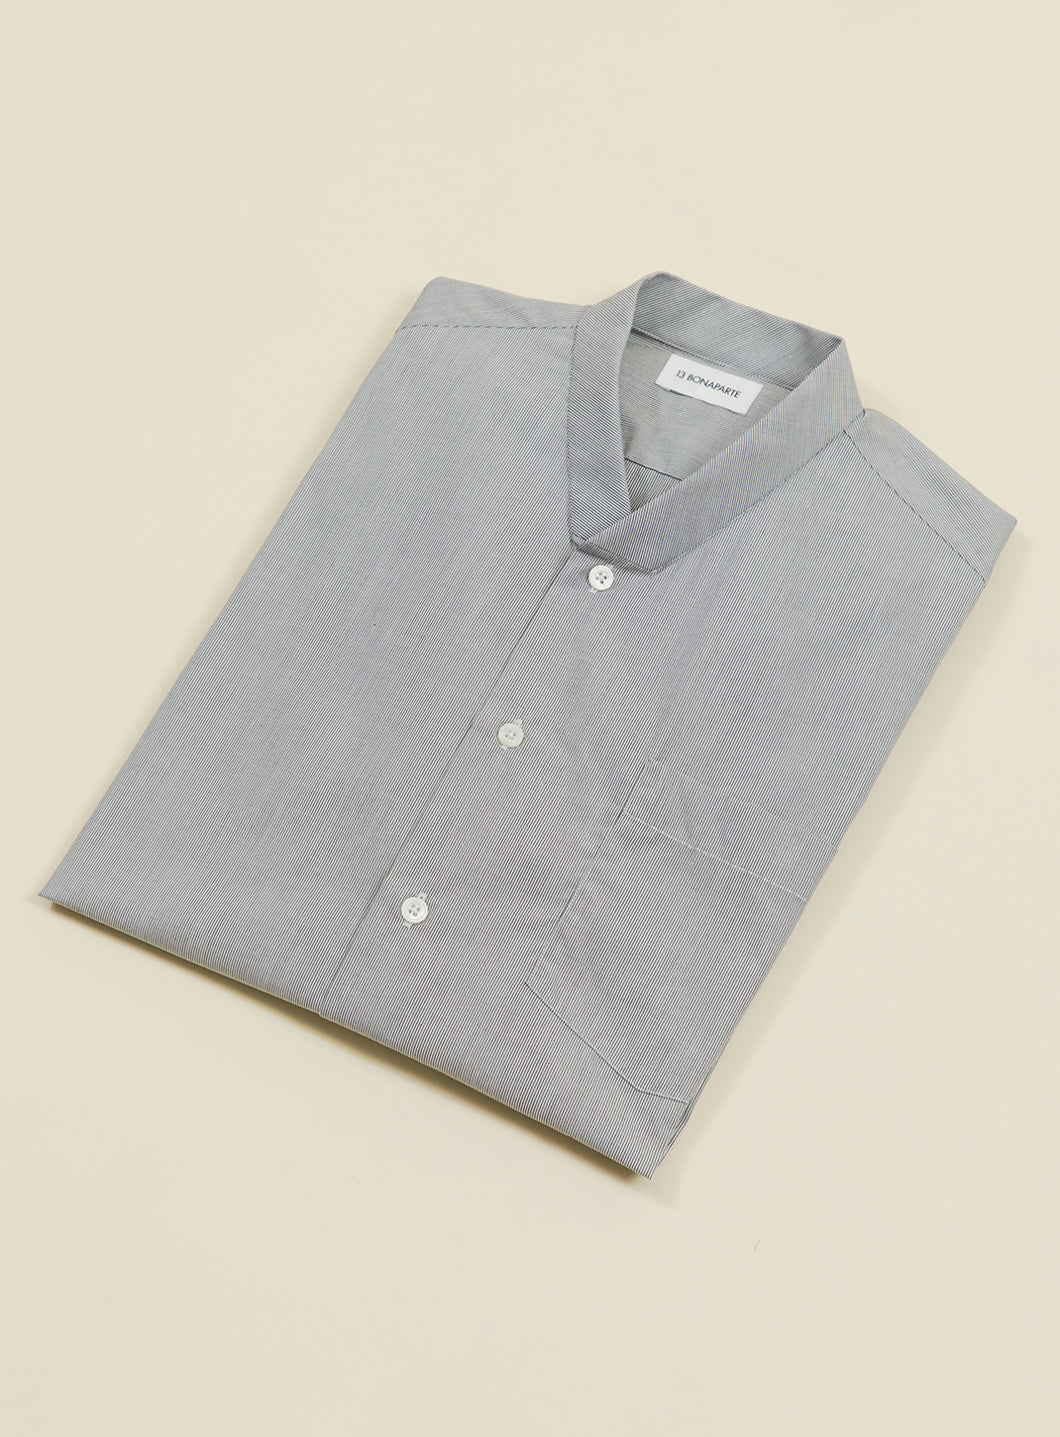 False Collar Shirt in Fine Stripe Grey Poplin